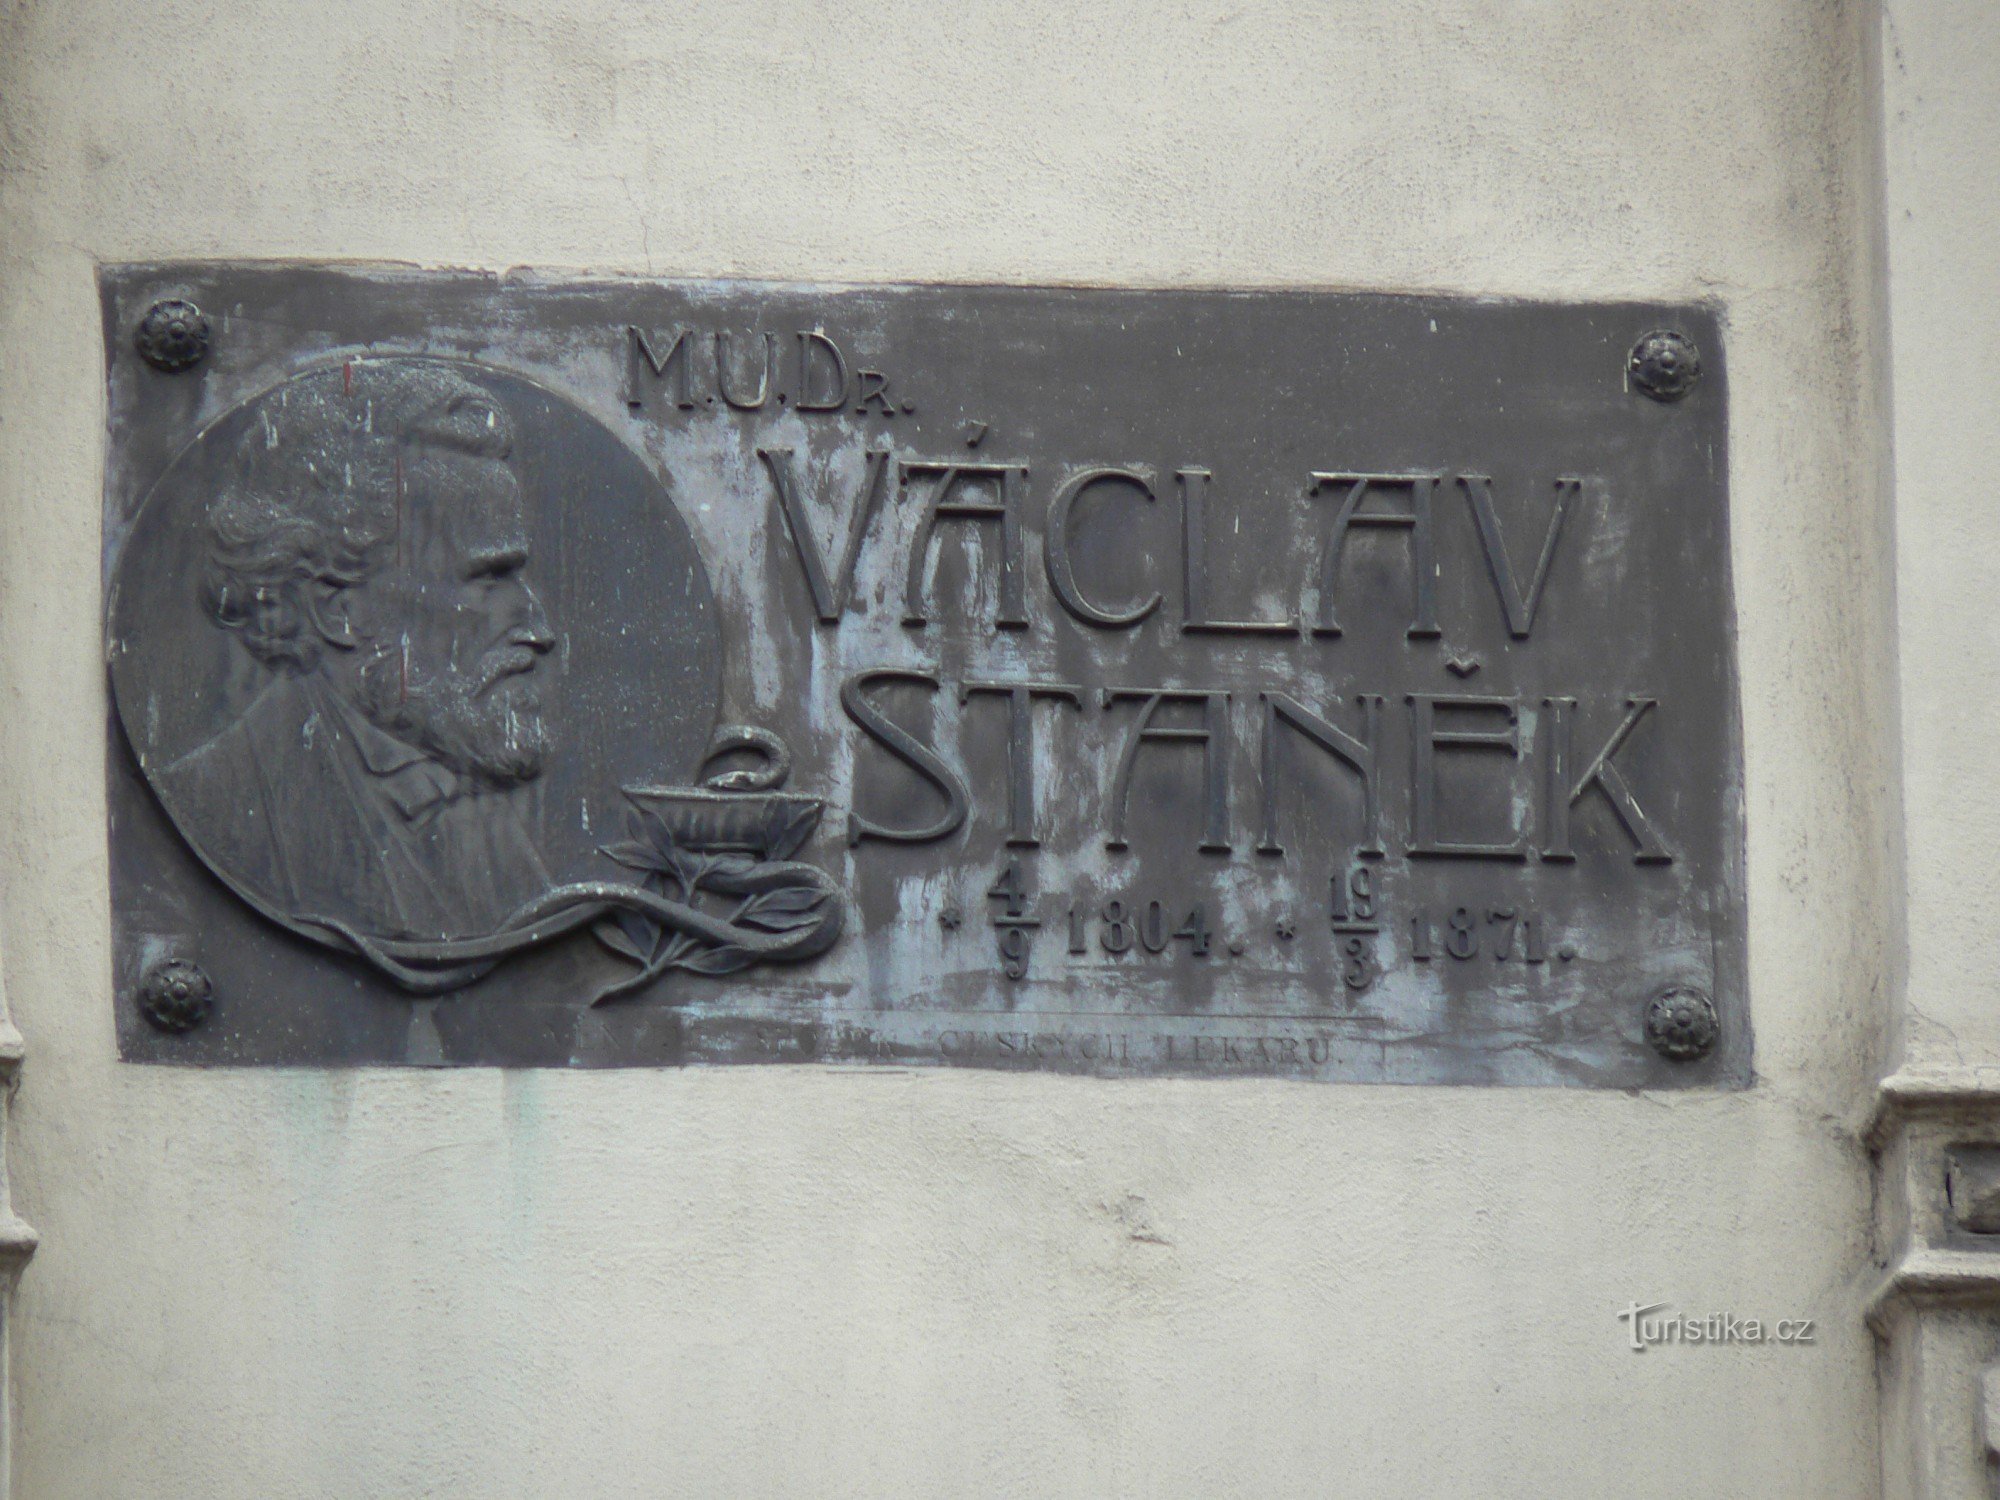 Mindeplade MUDr. Václav Stanek